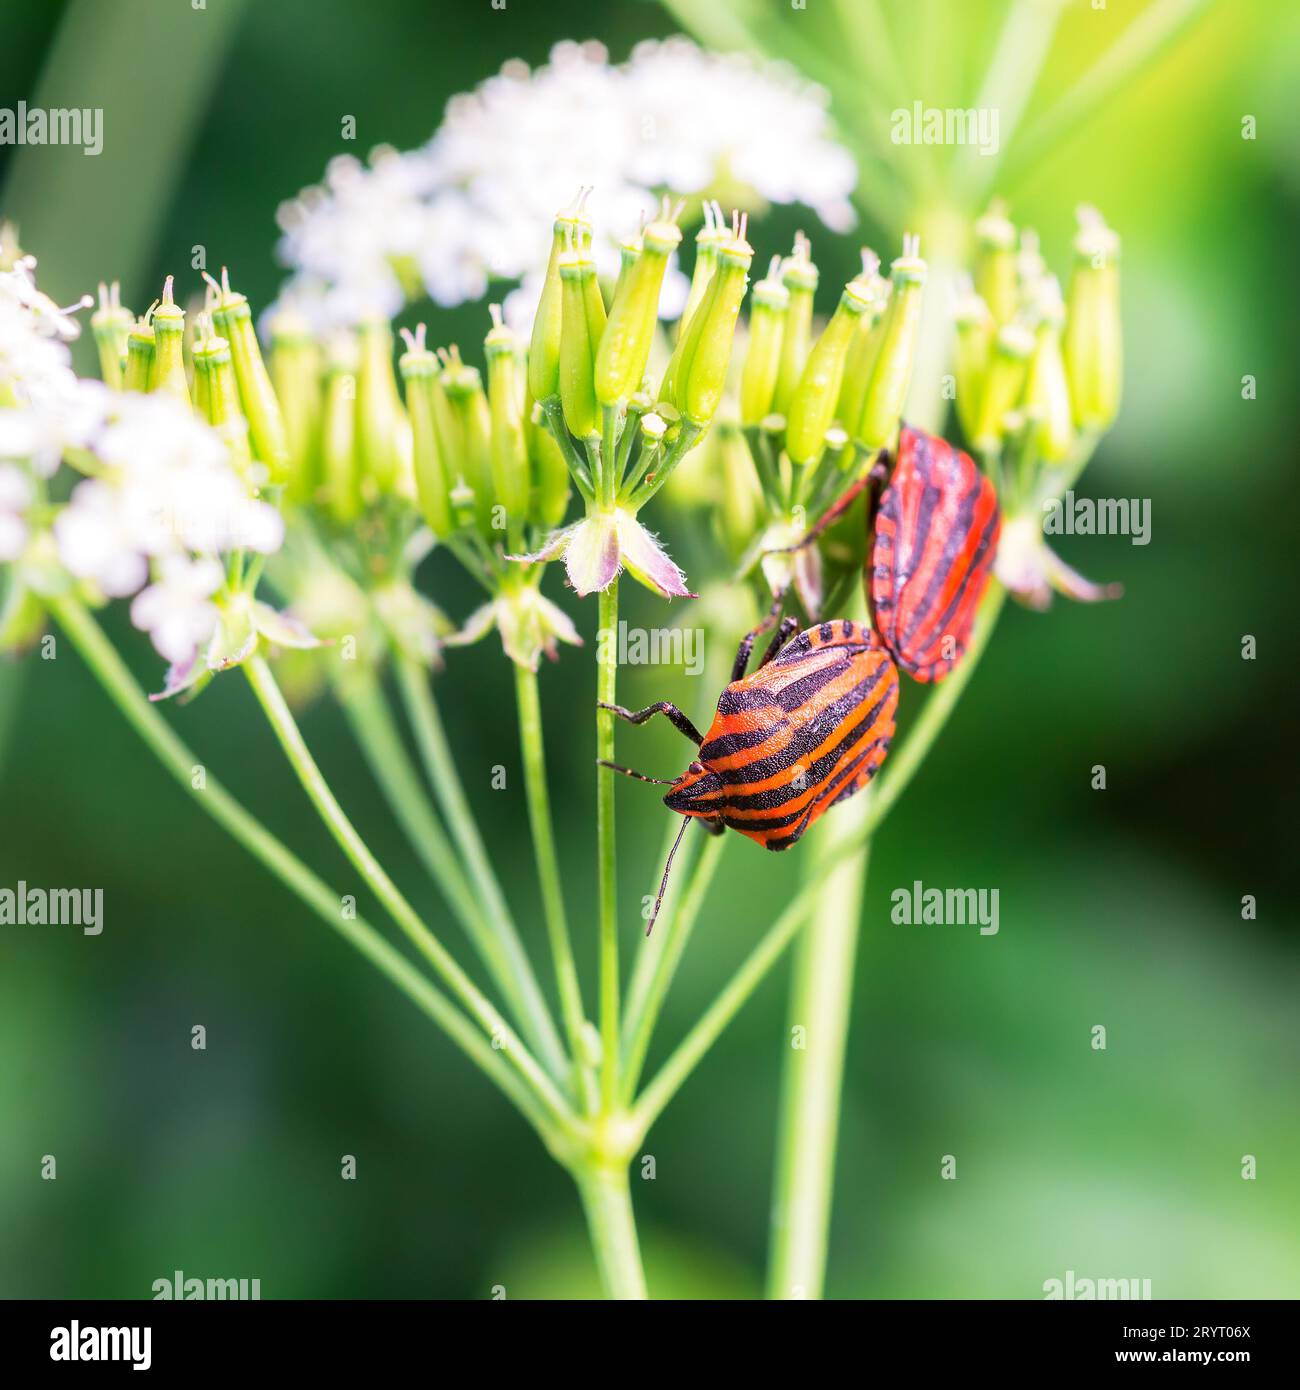 Firebug, Pyrrhocoris apterus, is a common insect of the family Pyrrhocoridae - macro details Stock Photo